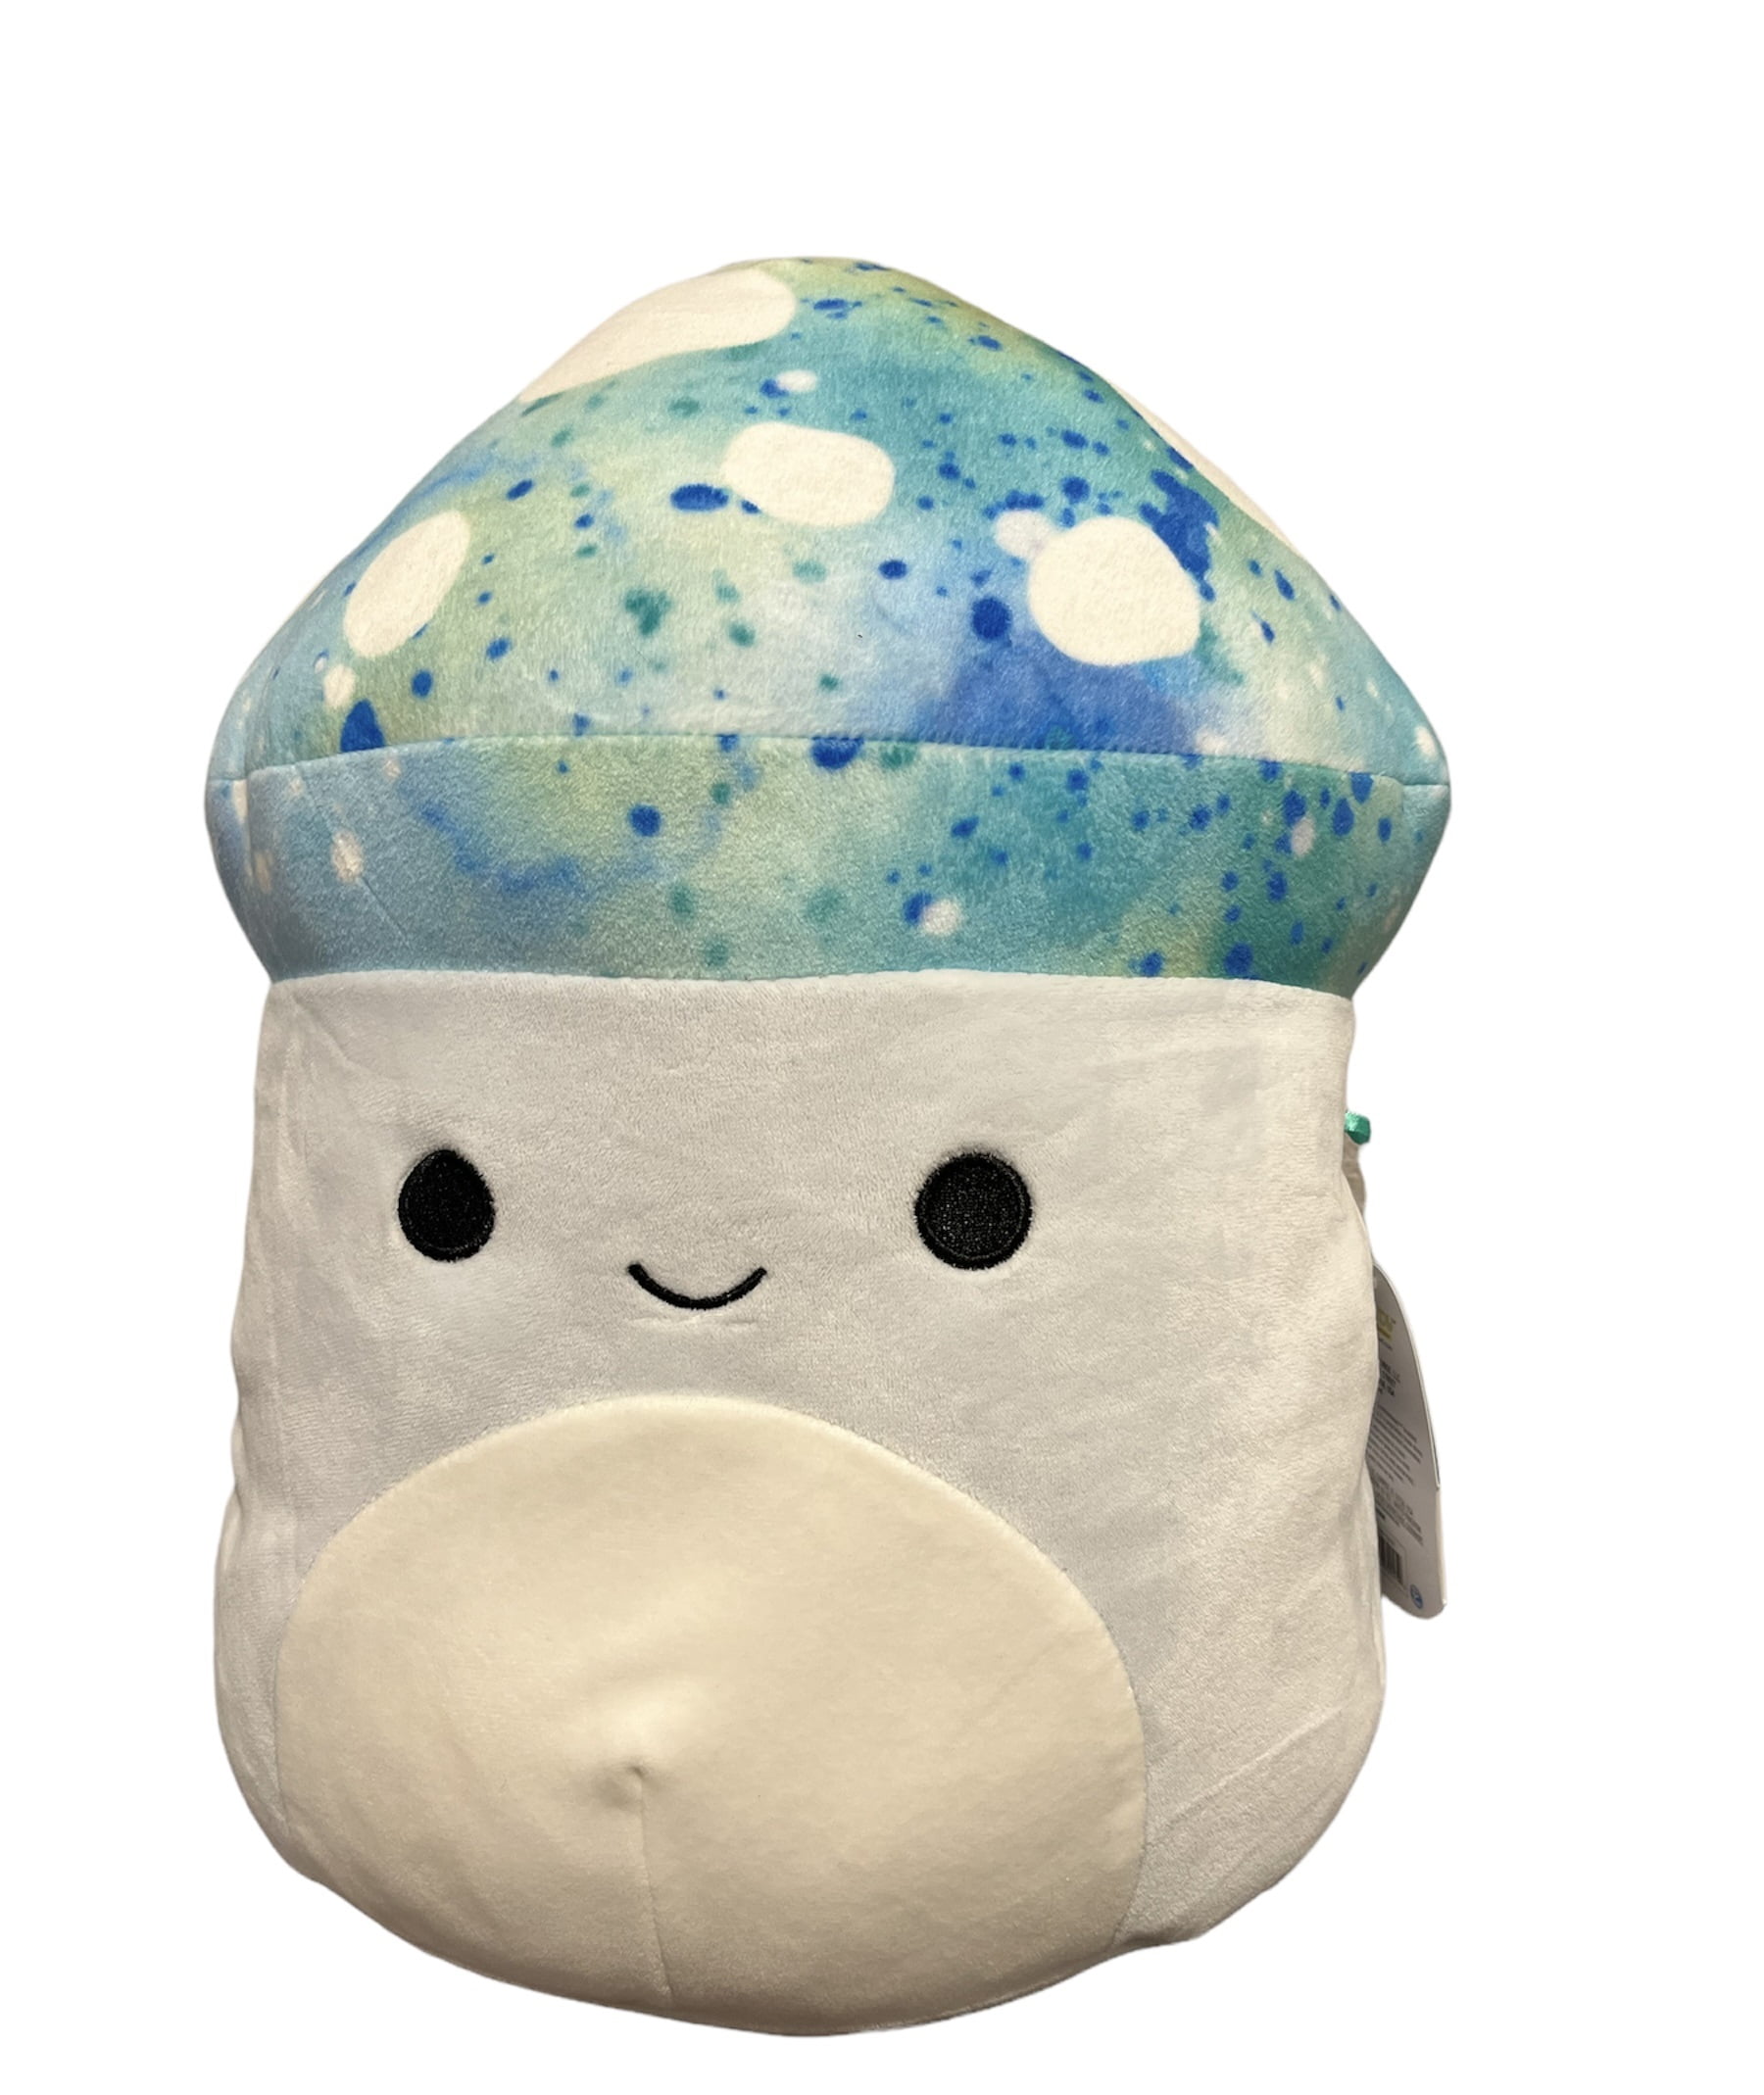 NEW Squishmallow Stuffed Plush Toys for Kids Cute Mushroom Doll Soft Decor Gift 